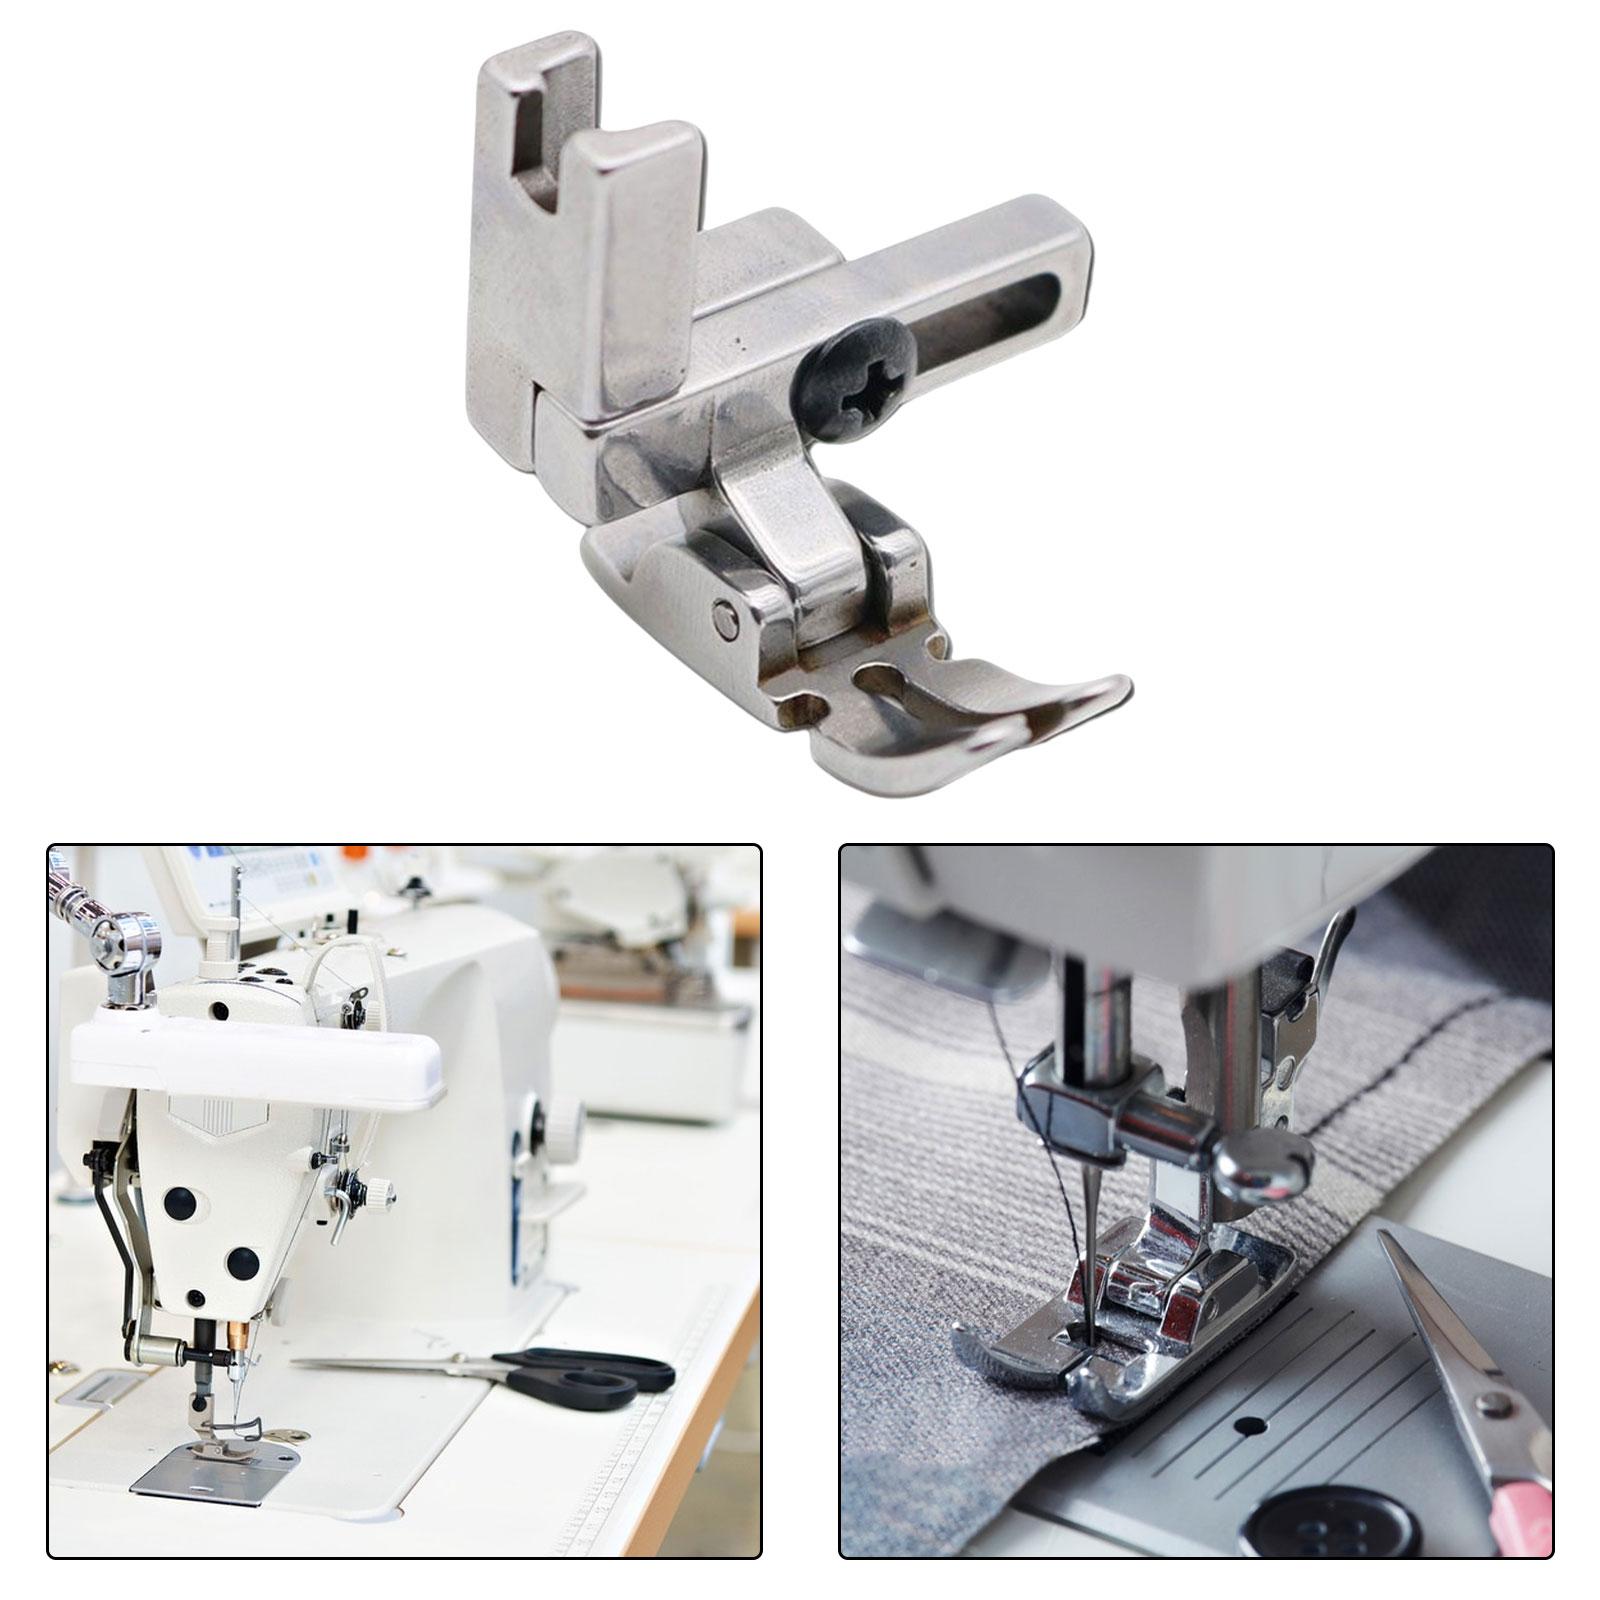 Auxiliariary Presser Foot Spare Cording für Computermustermaschine Topstitching Quilting Decorative Stitching Home Sewing Machine